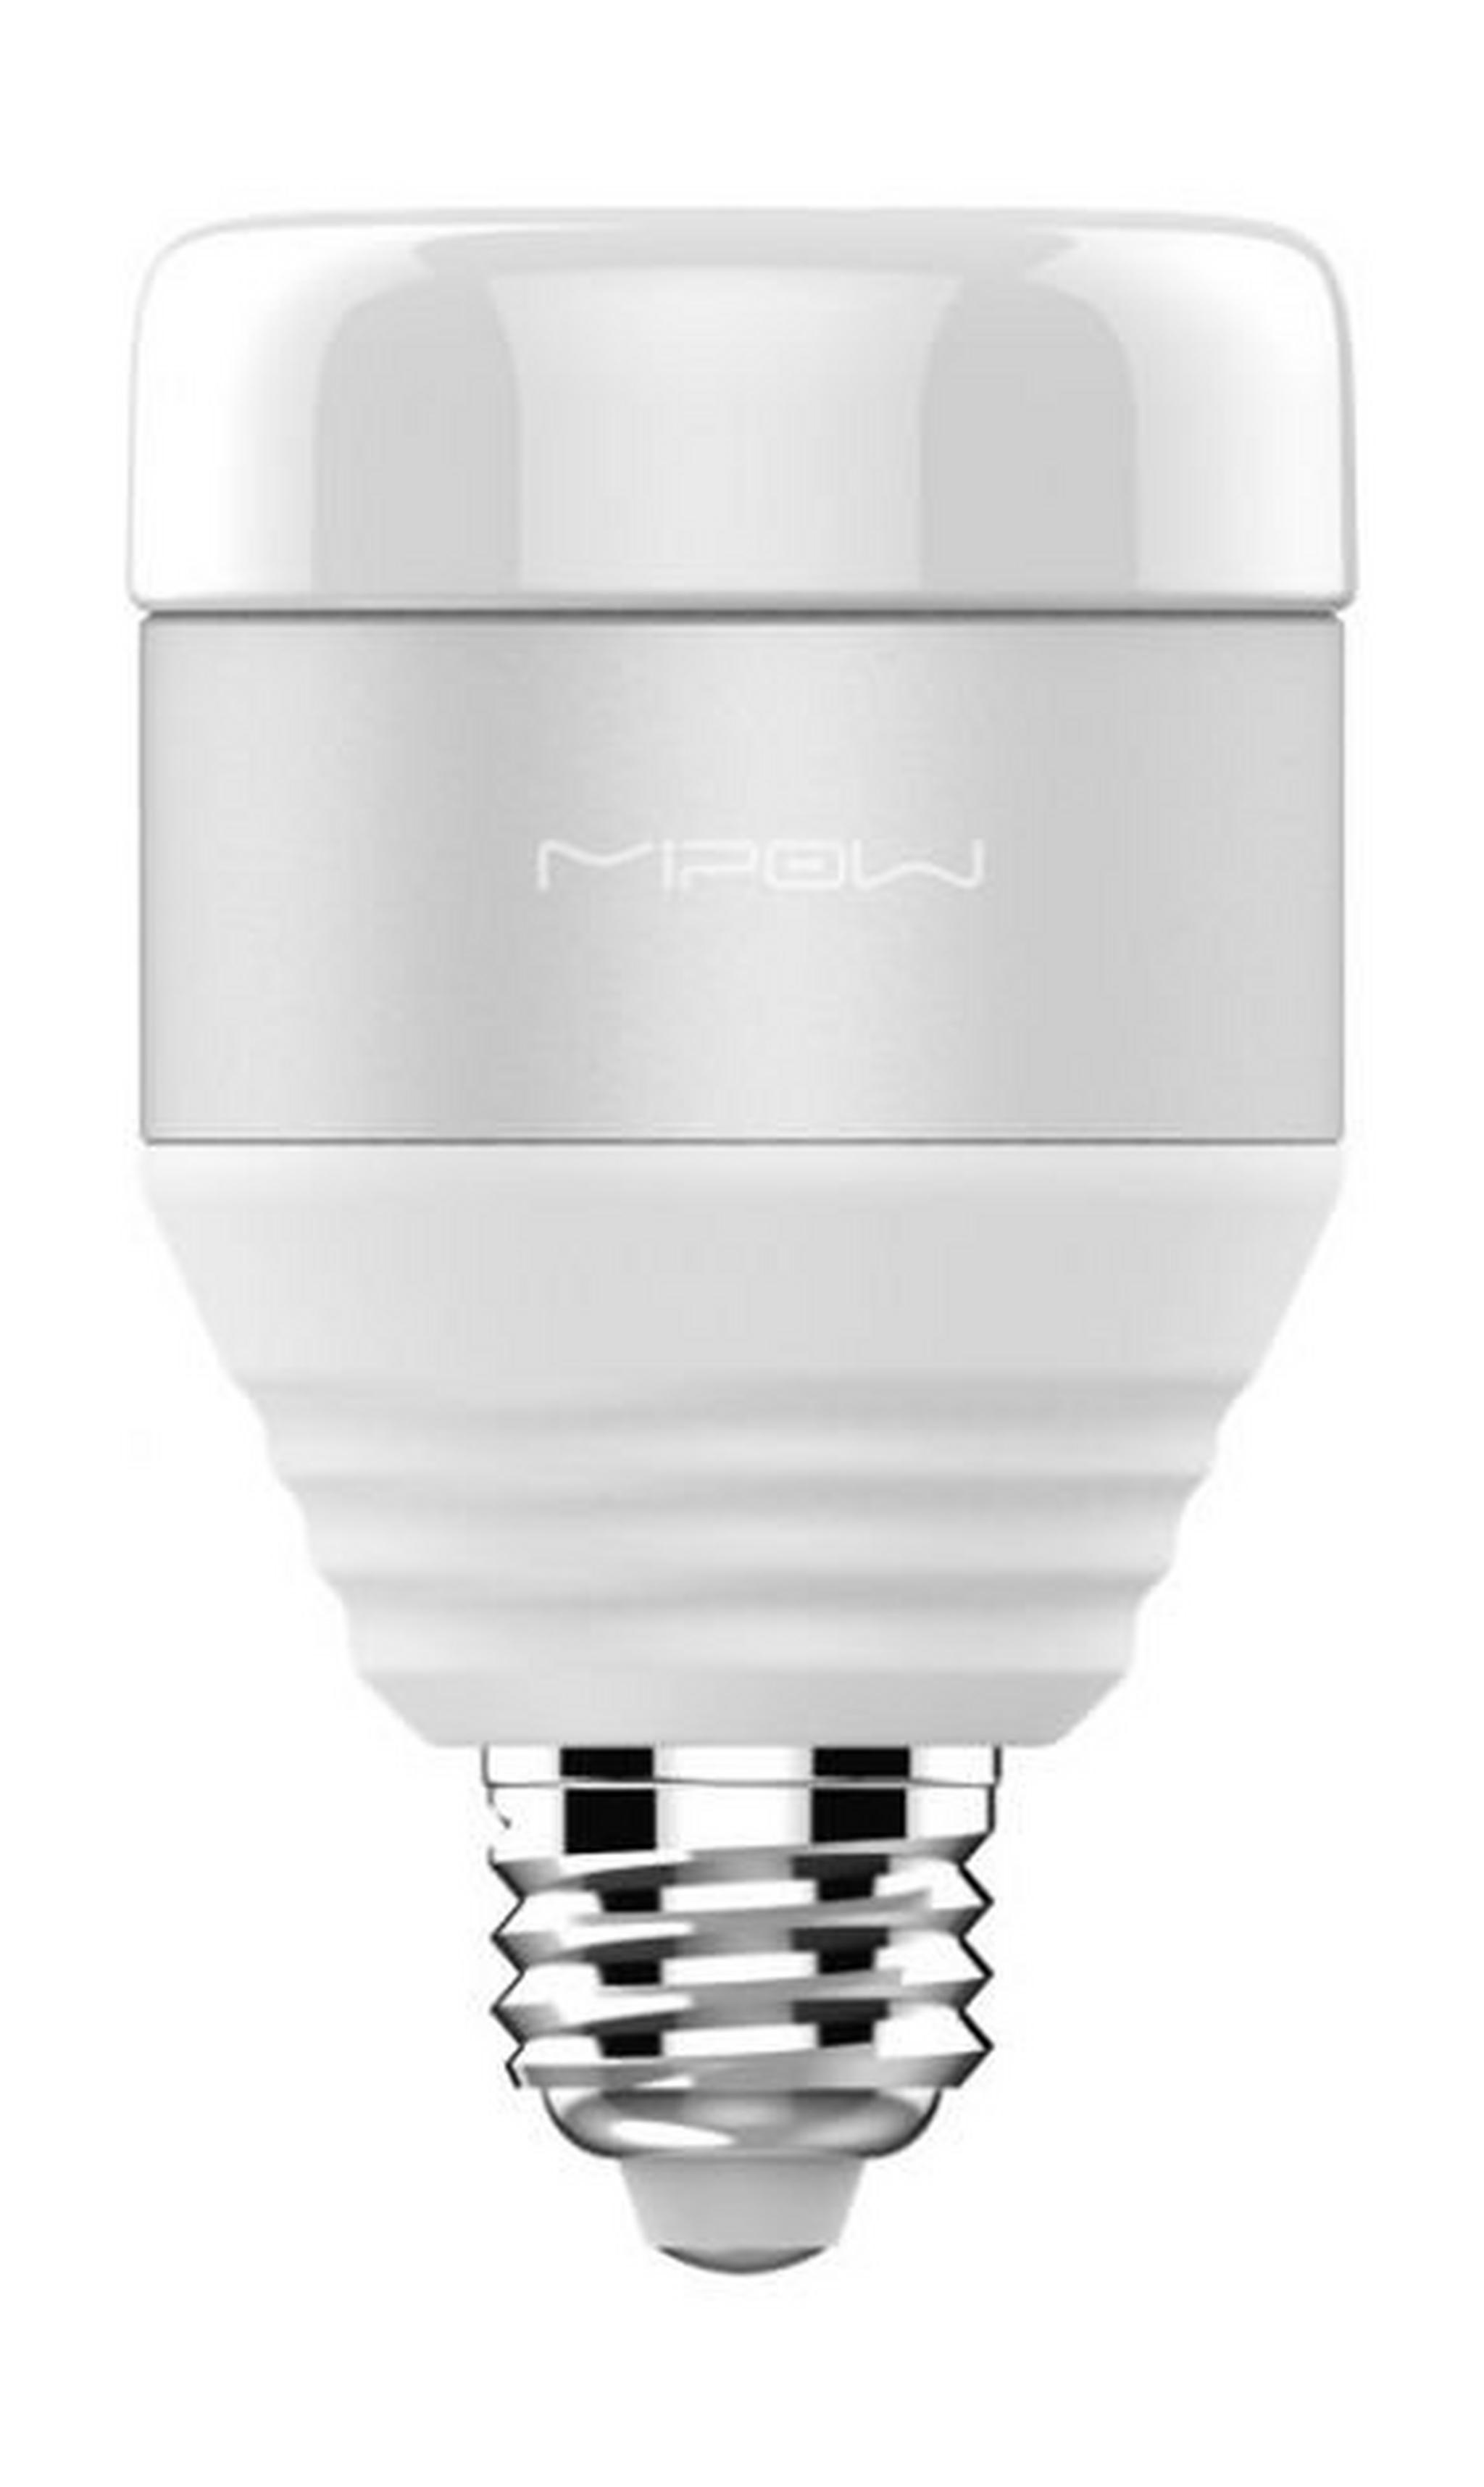 Mipow BTL201 Multi-Colored Bluetooth Smart LED Light Bulb - White